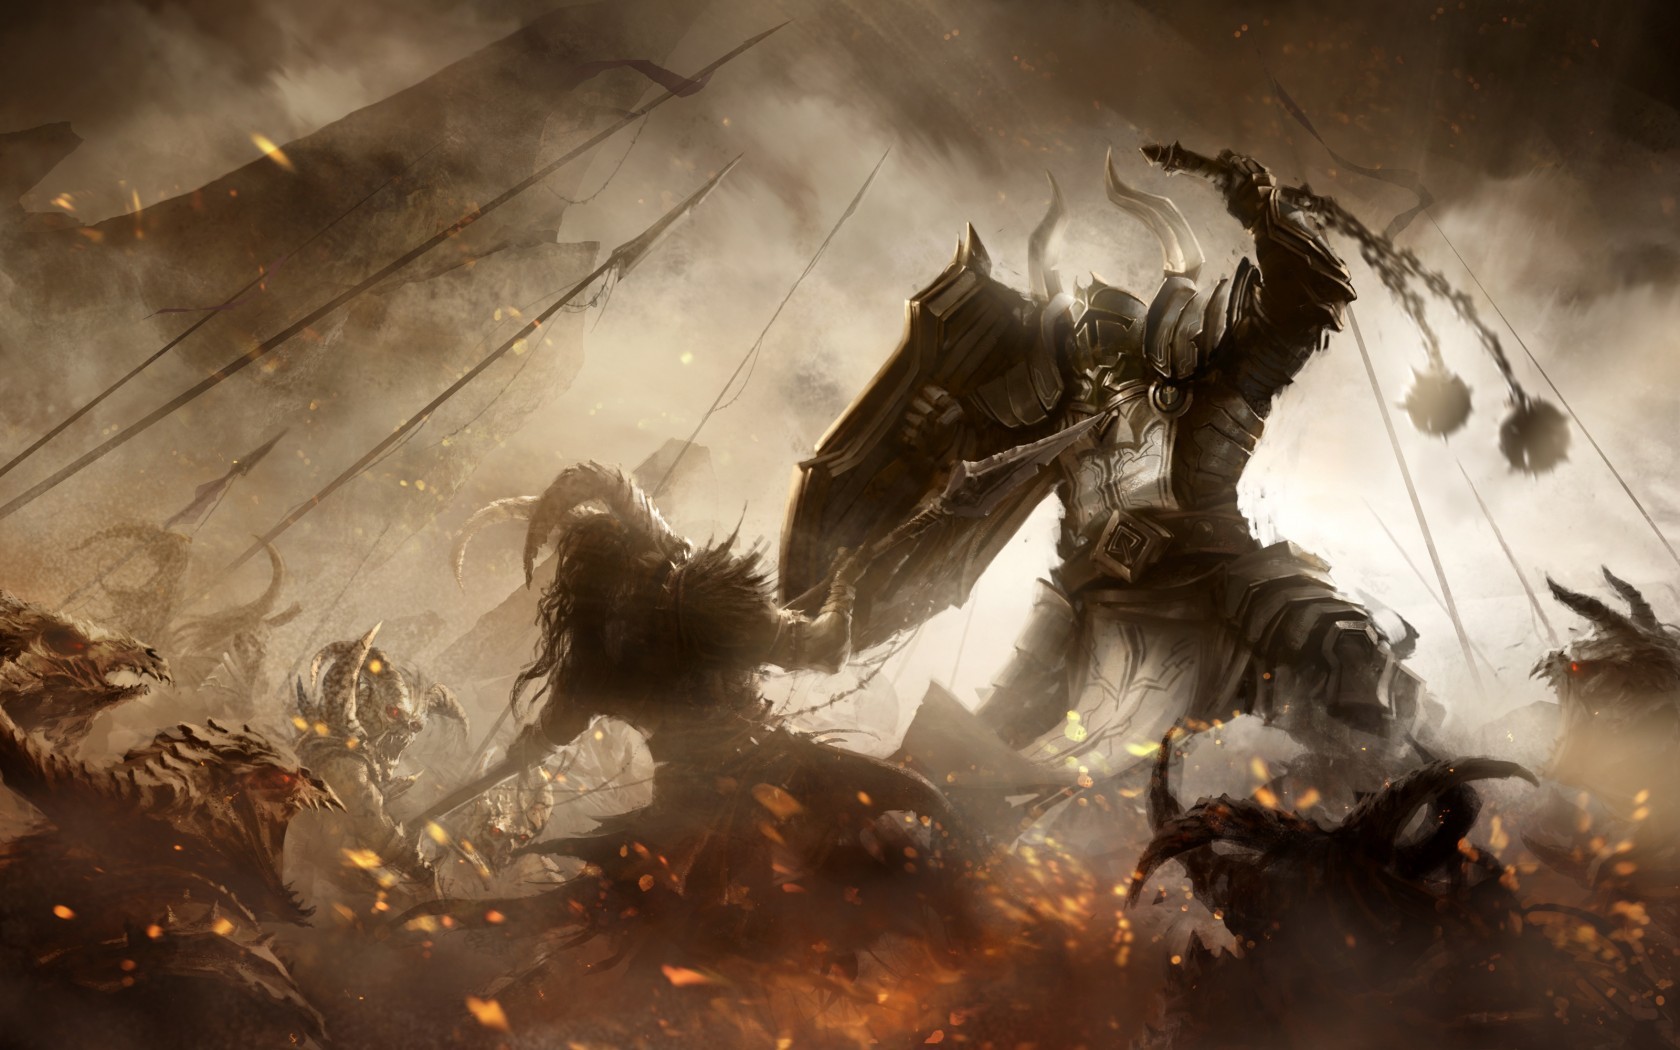 General 1680x1050 Diablo III Diablo video games fantasy art digital art warrior Crusader (Diablo) PC gaming battle video game art